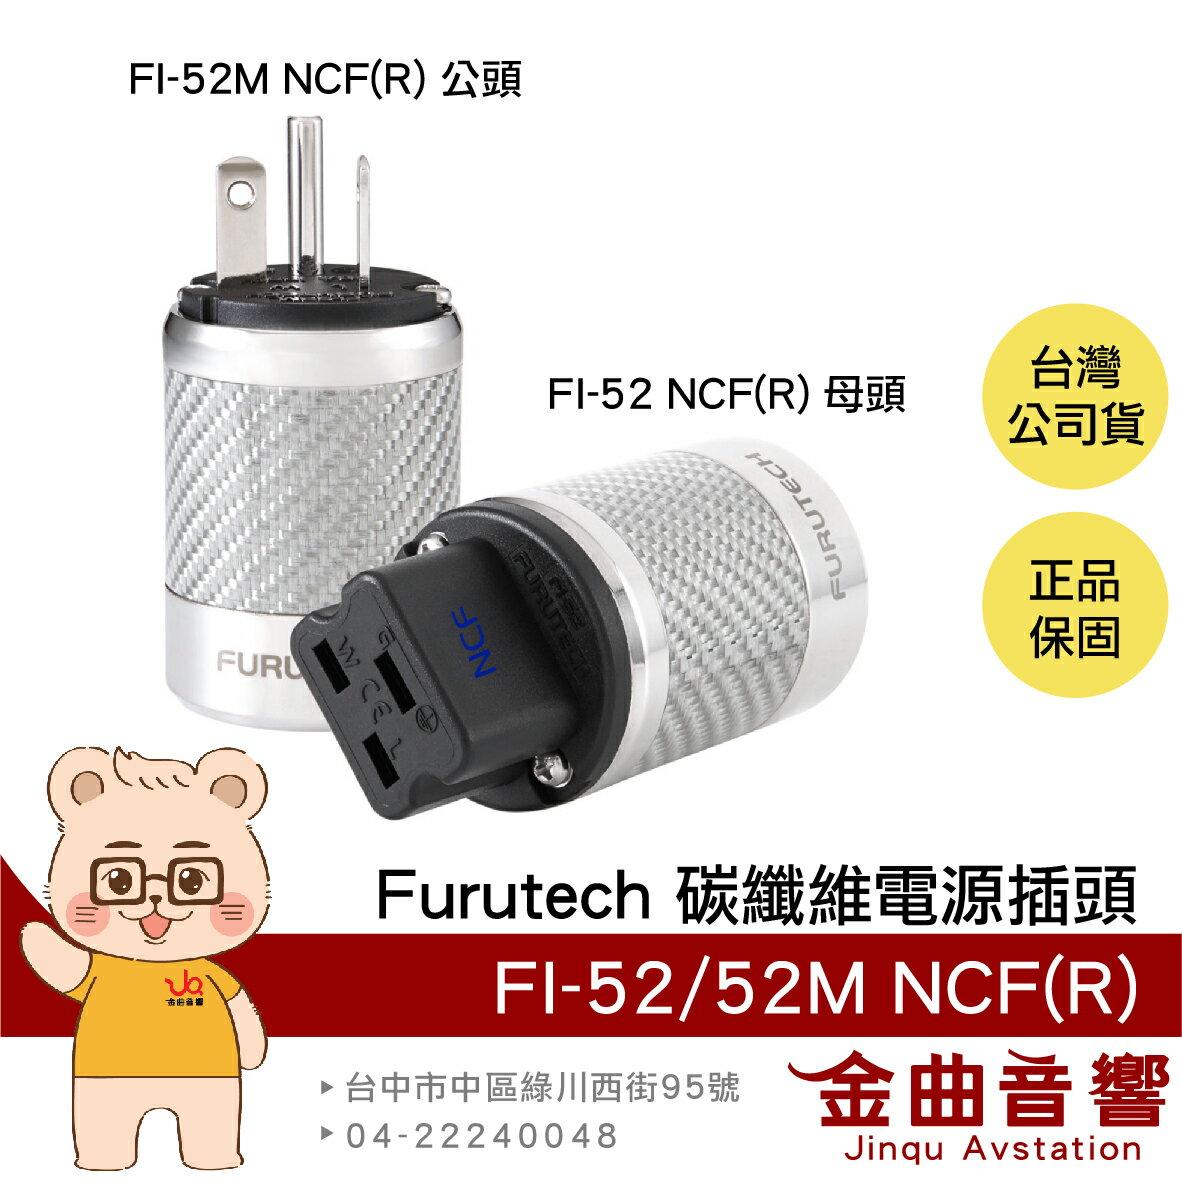 FURUTECH 古河 FI-52 NCF(R) FI-52M NCF(R) 碳纖維 20A 電源插頭 | 金曲音響